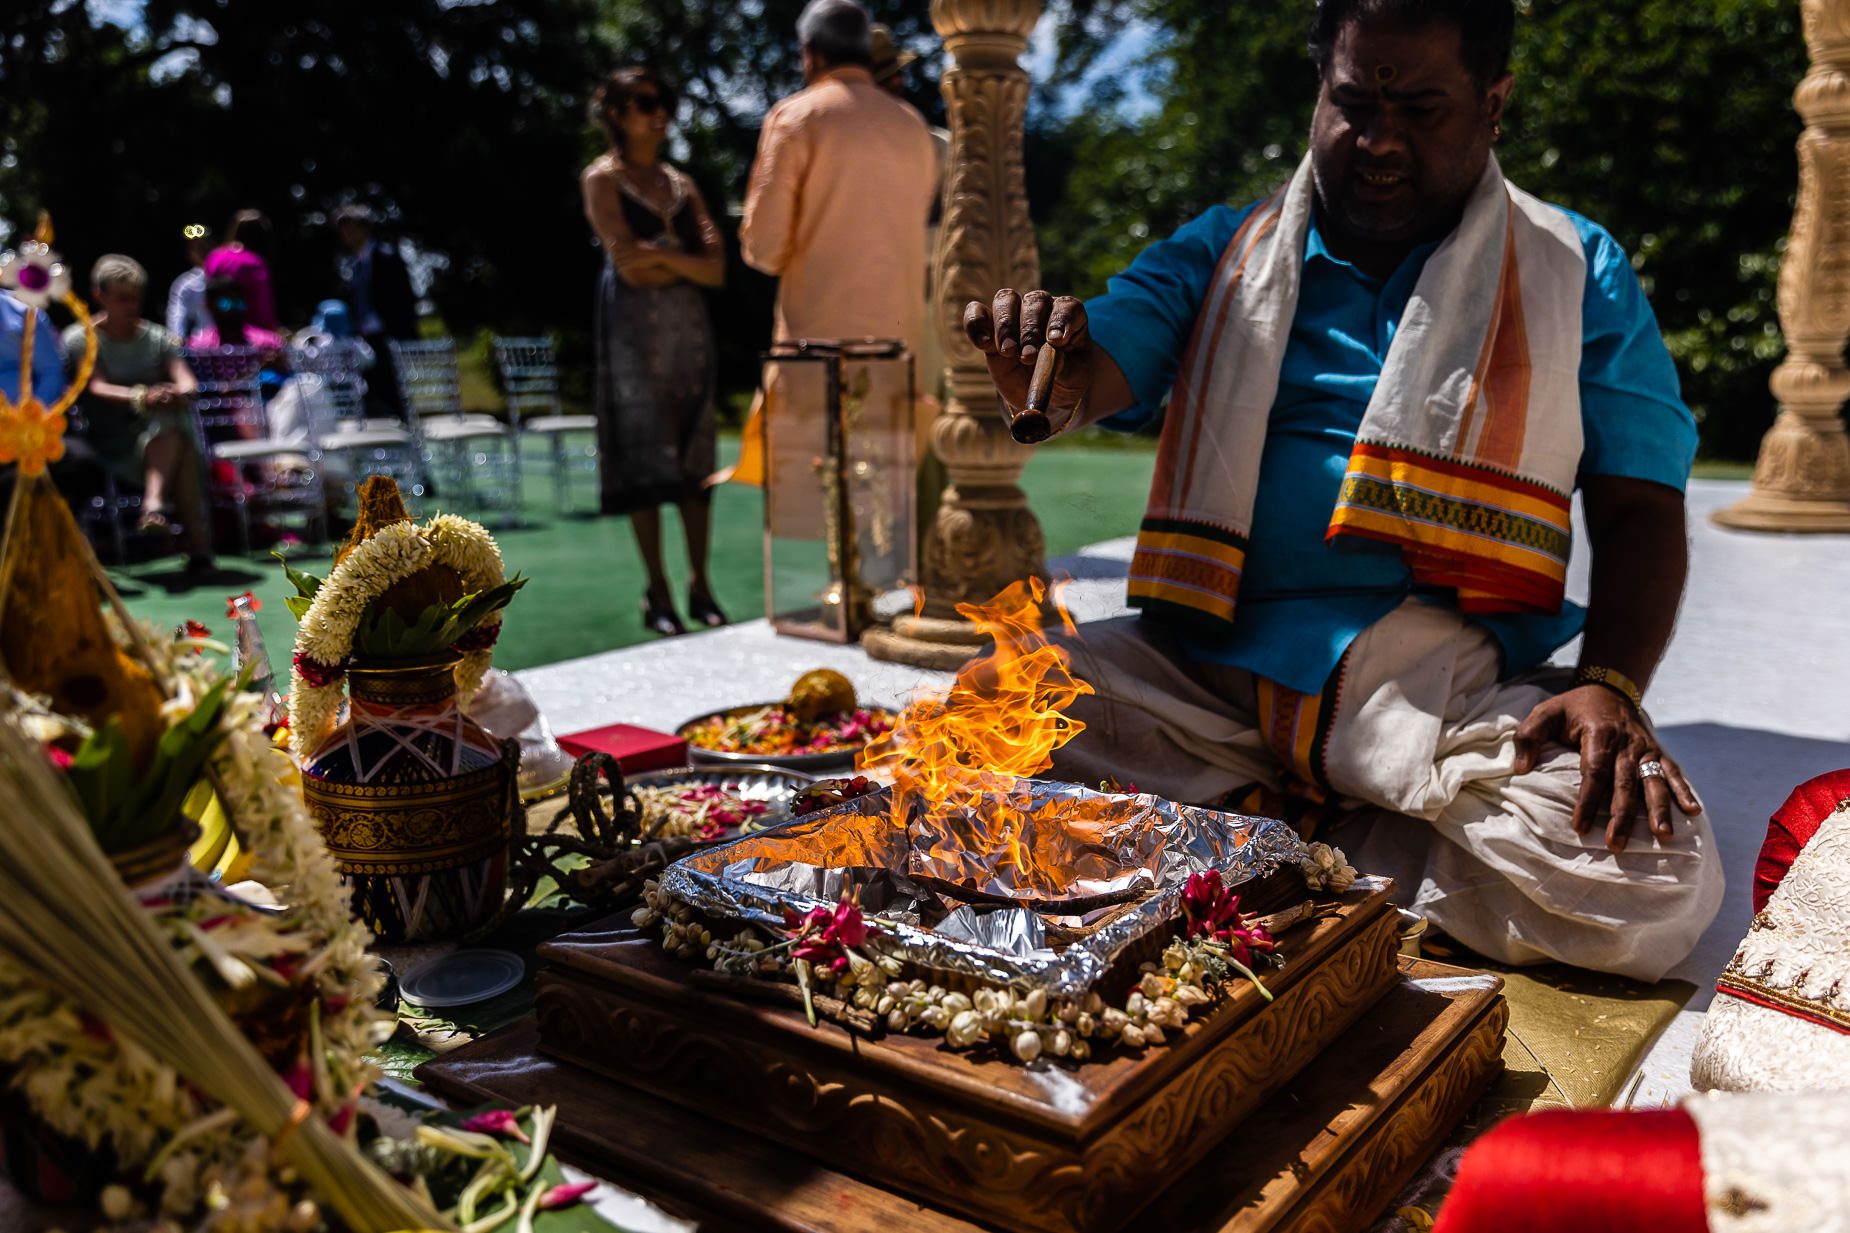 Hindu wedding ceremony